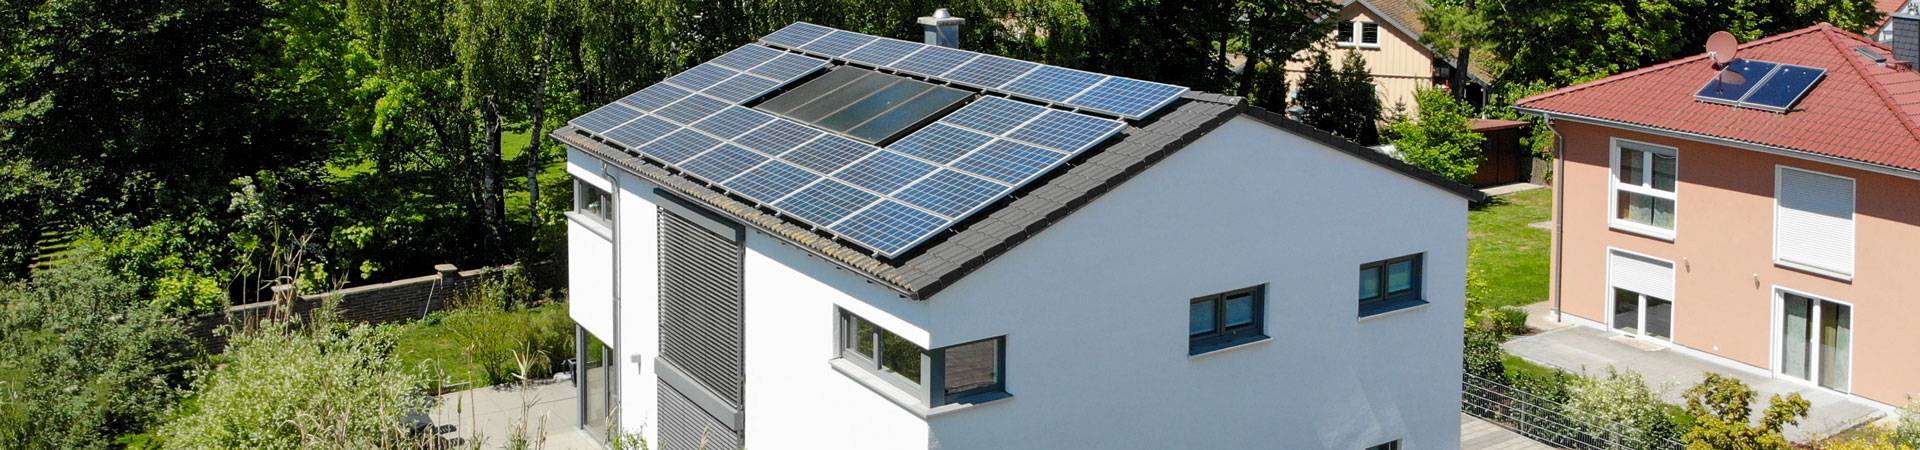 photovoltaik warendorf